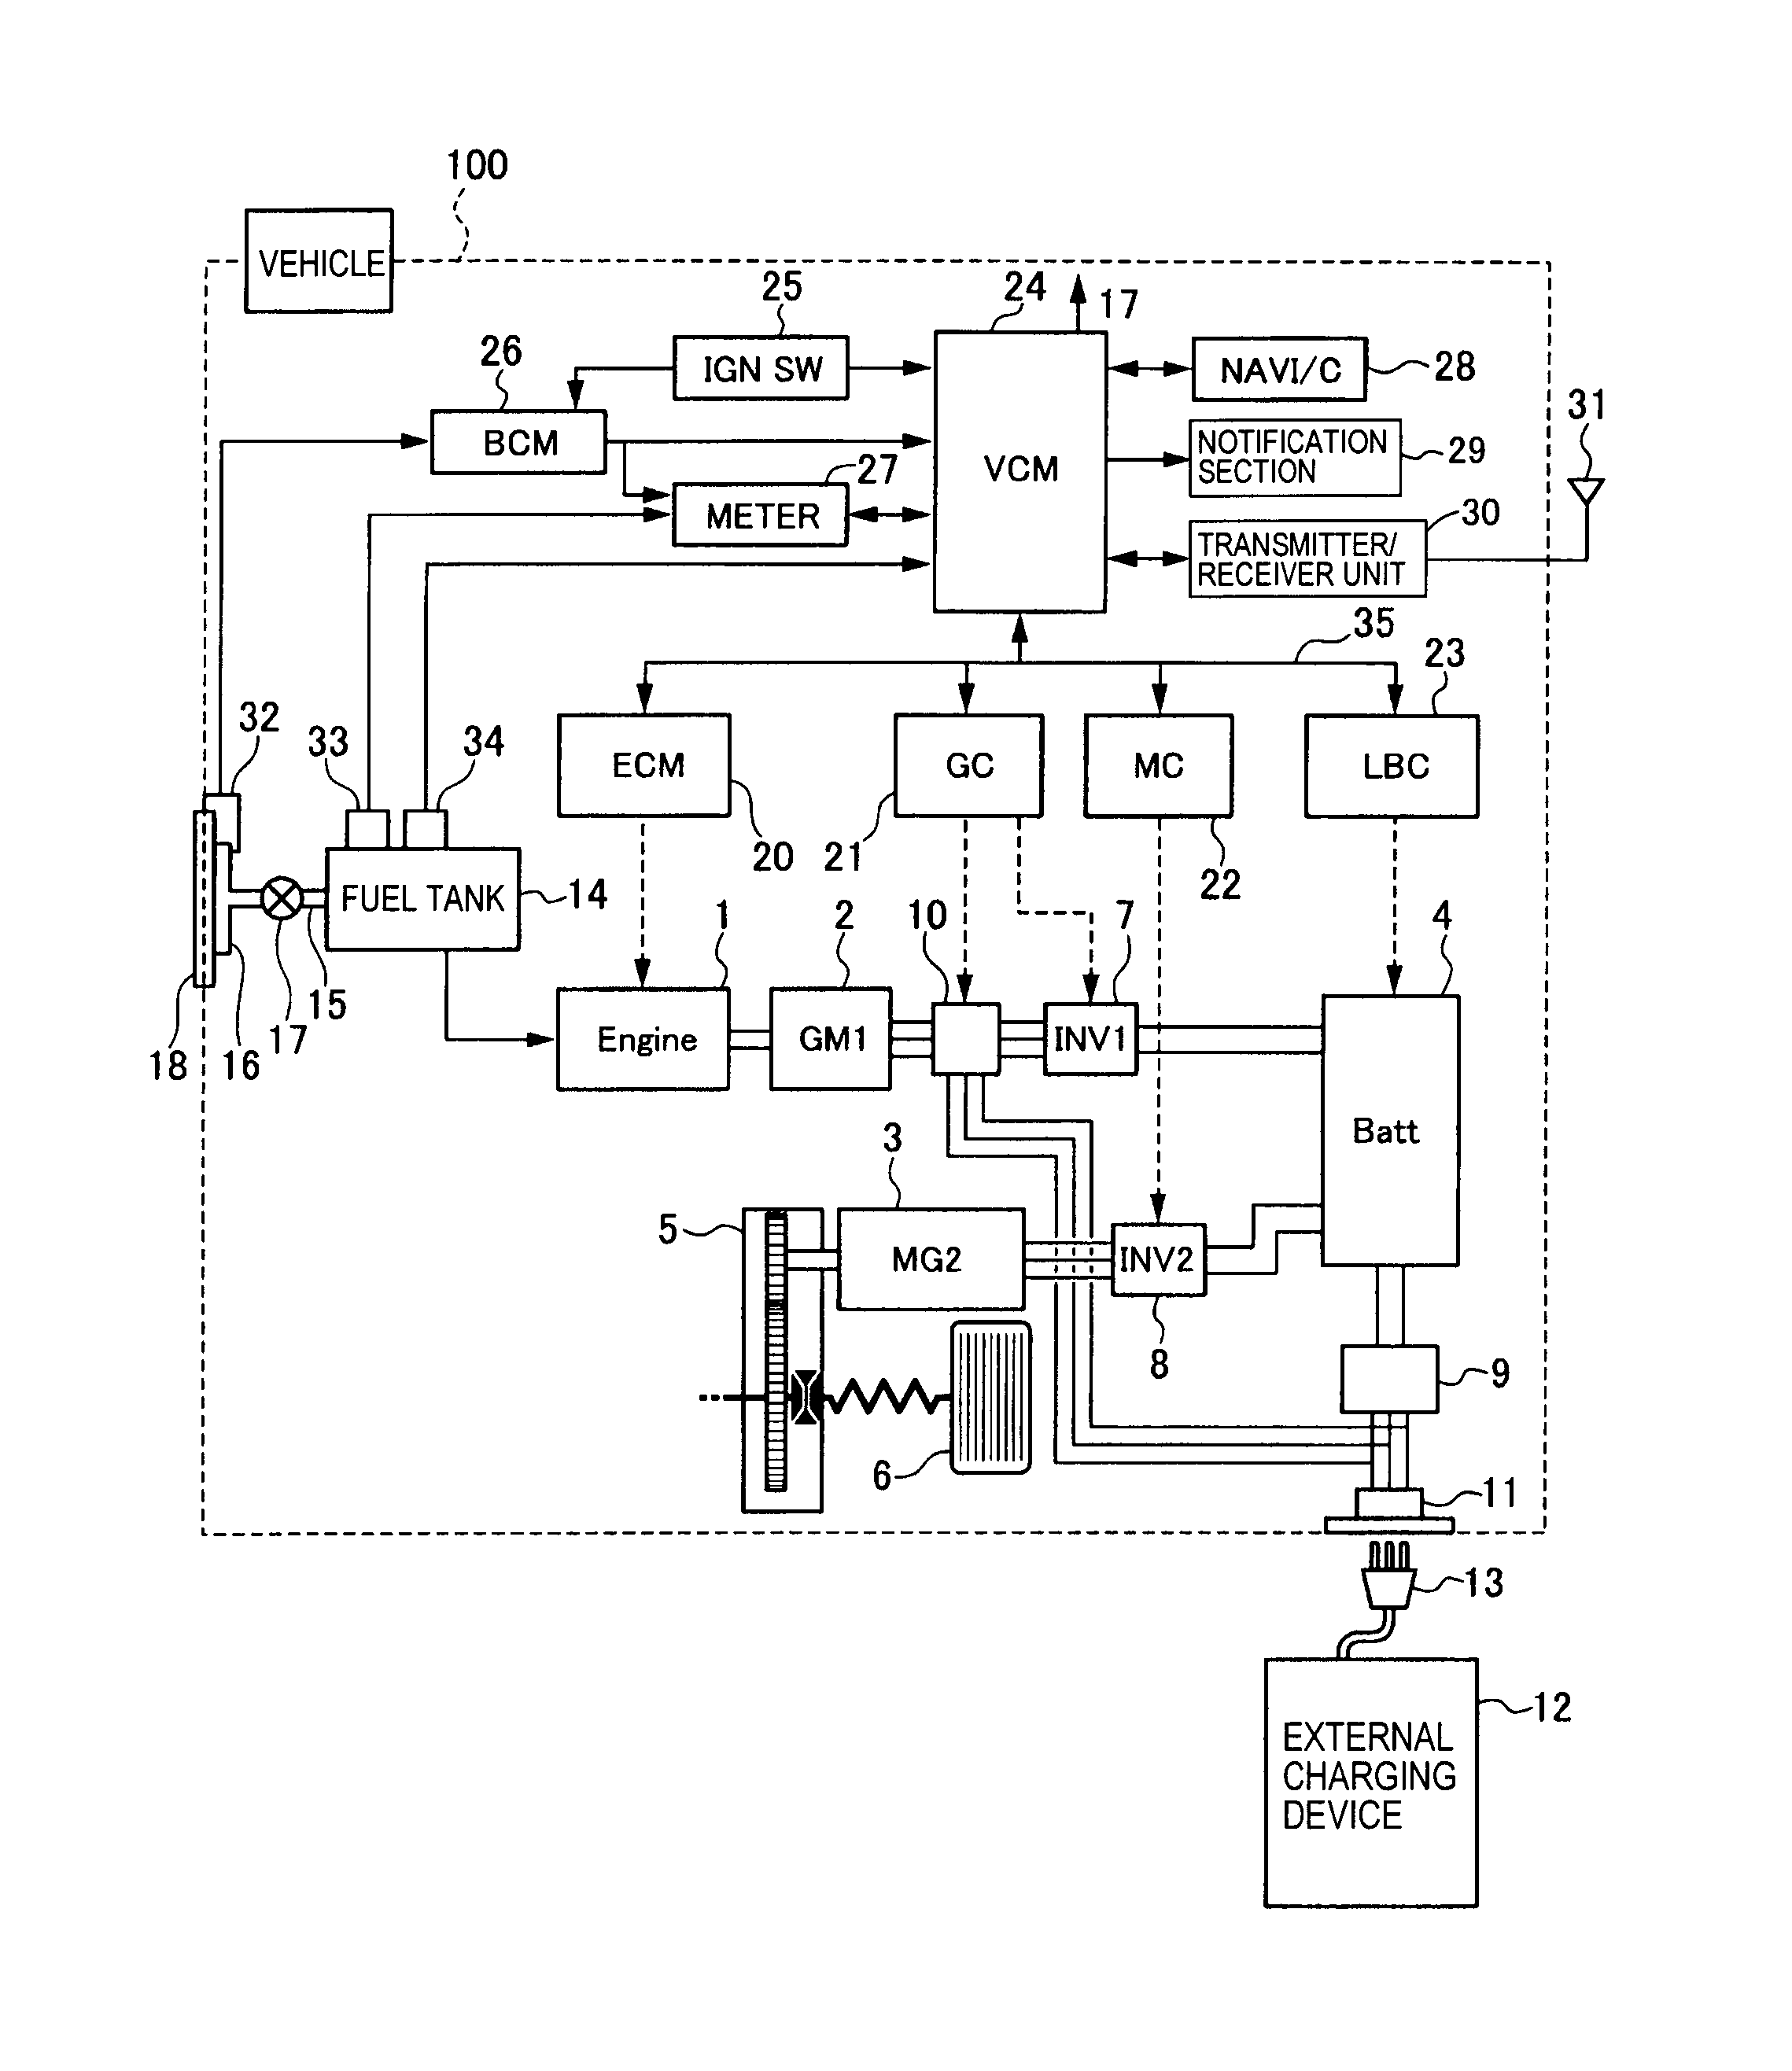 attwood bilge pump wiring diagram